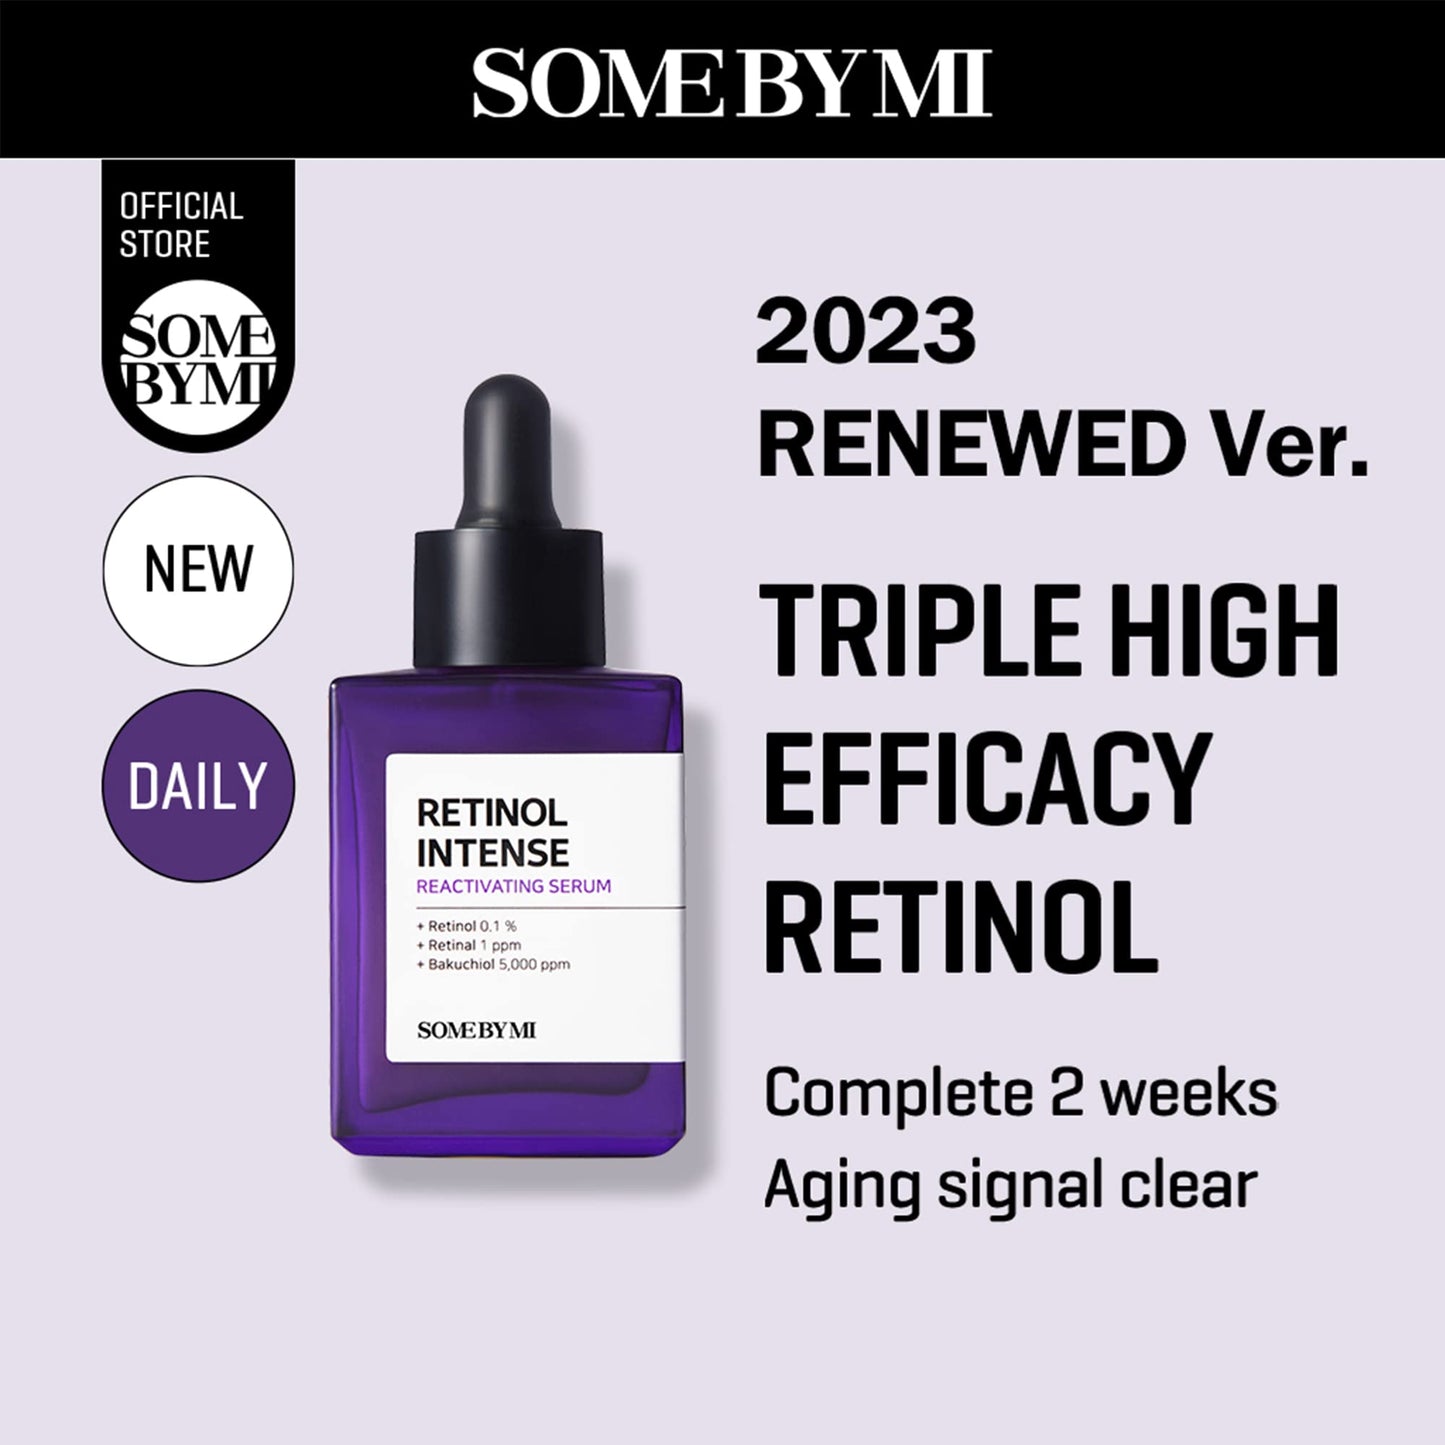 SOME BY MI Retinol Intense Reactivating Serum - 1.01Oz, 30ml - Mild Korean 0.1% Retinol Serum for Face Aging Sign and Glass Skin - Post Acne Marks, Skin Texture and Elasticity Care - Korean Skin Care